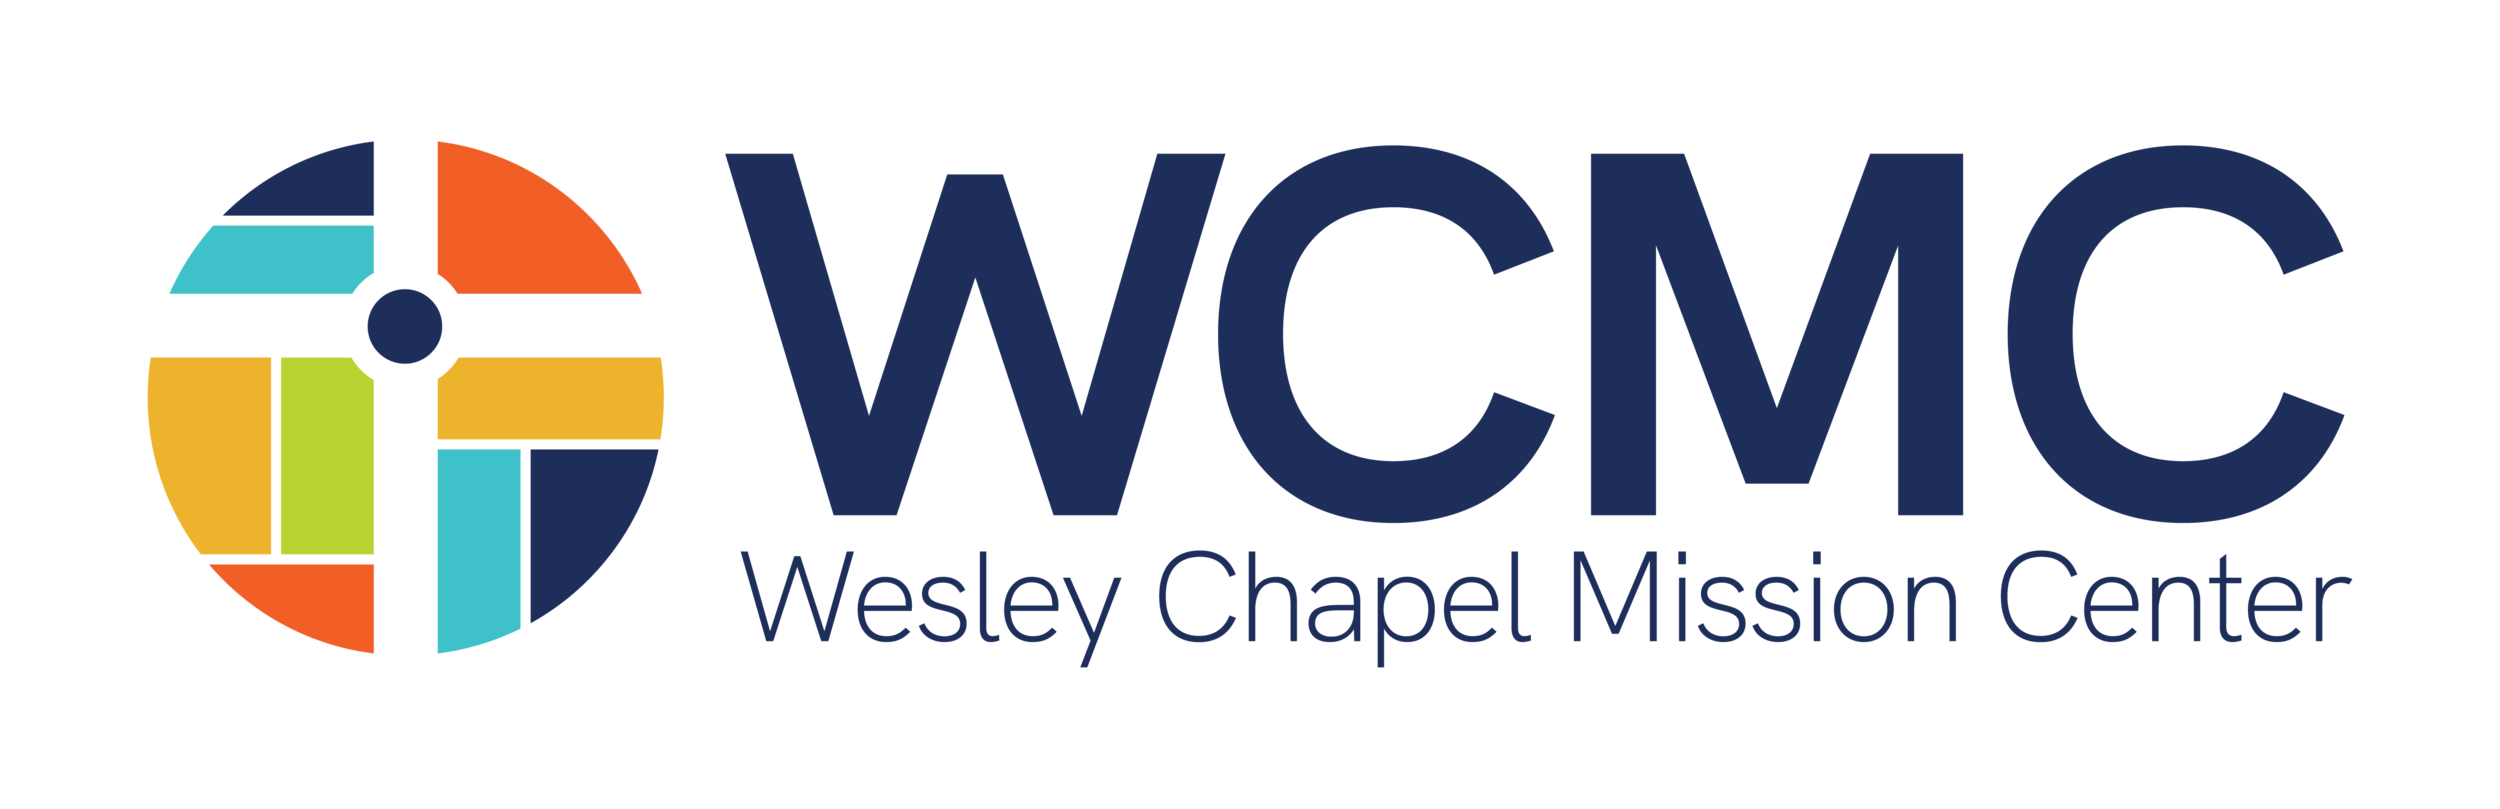 Wesley Chapel Mission Center